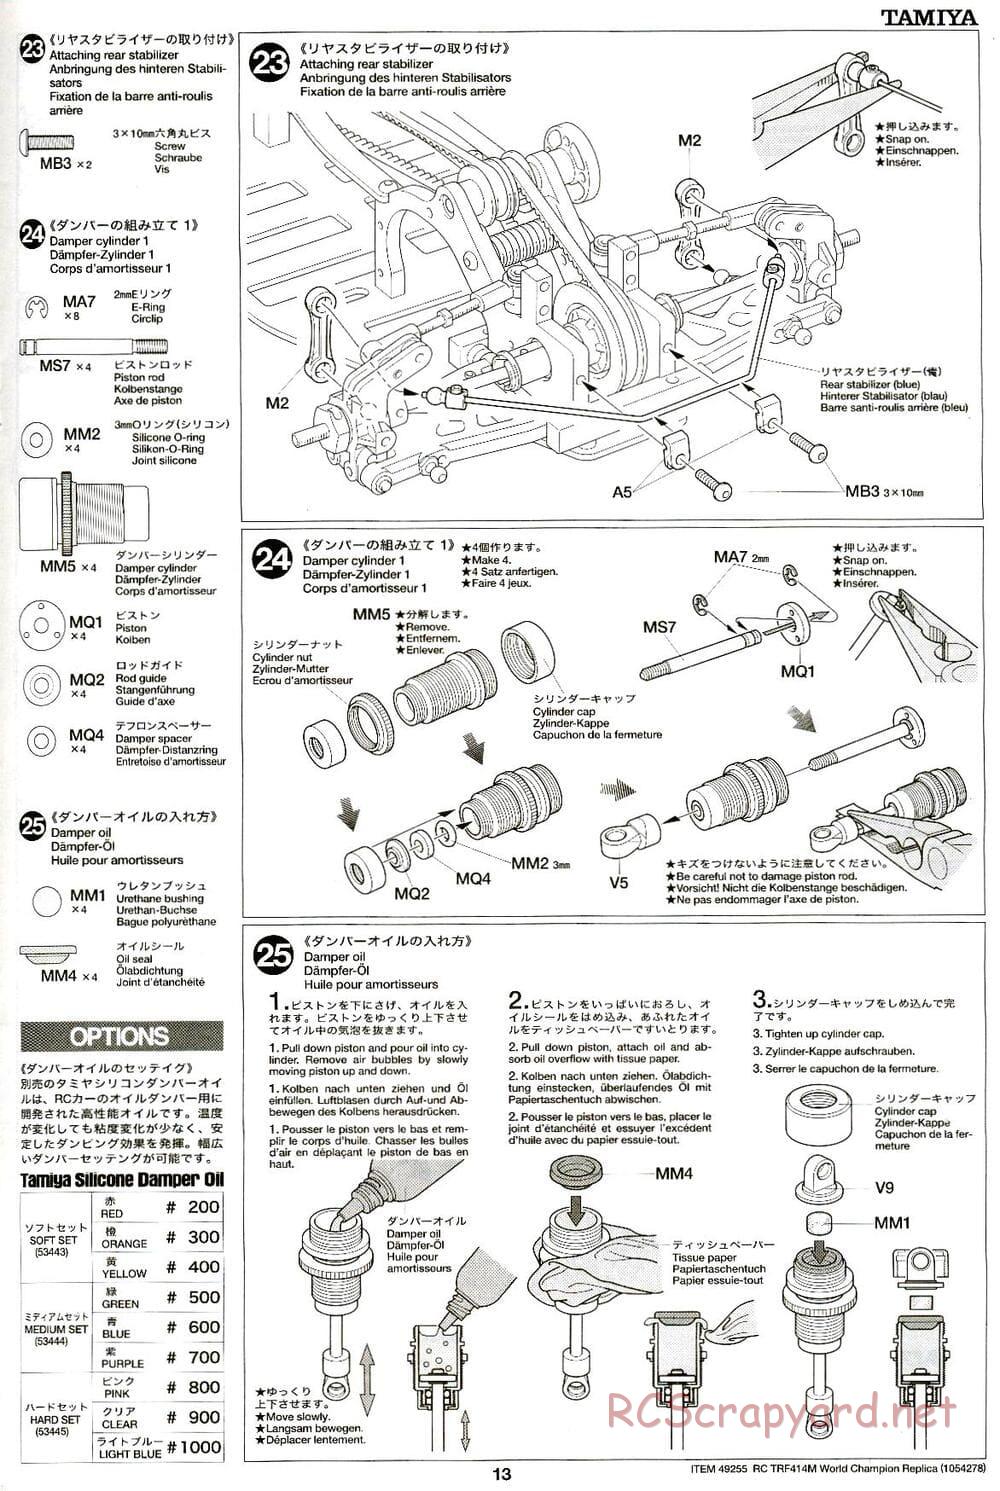 Tamiya - TRF414M World Champion Replica Chassis - Manual - Page 13